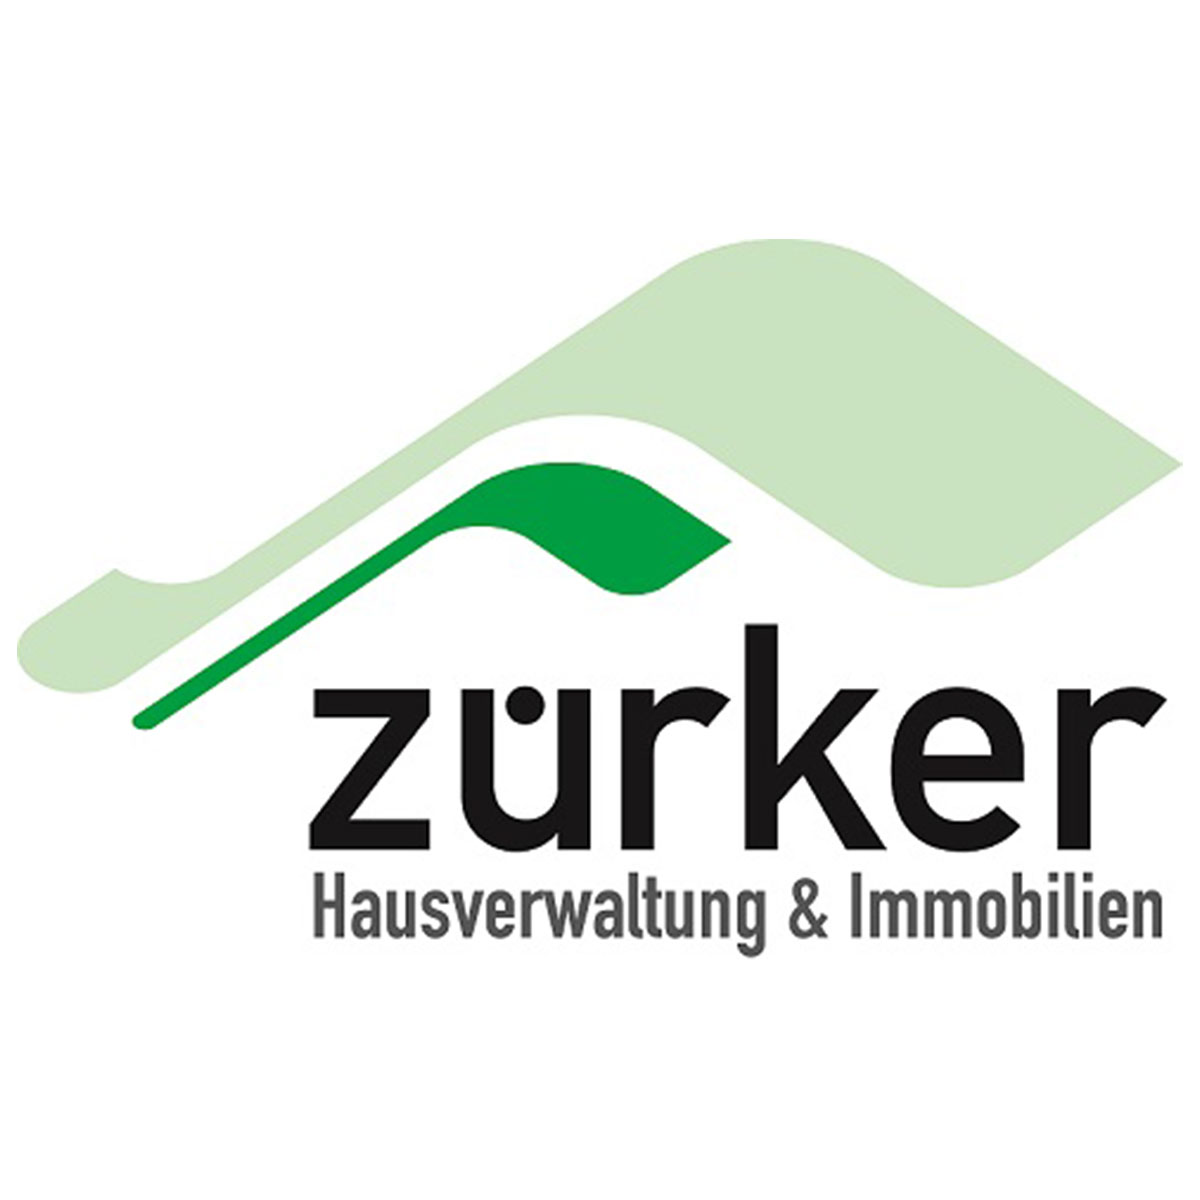 Zürker Hausverwaltung & Immobilien